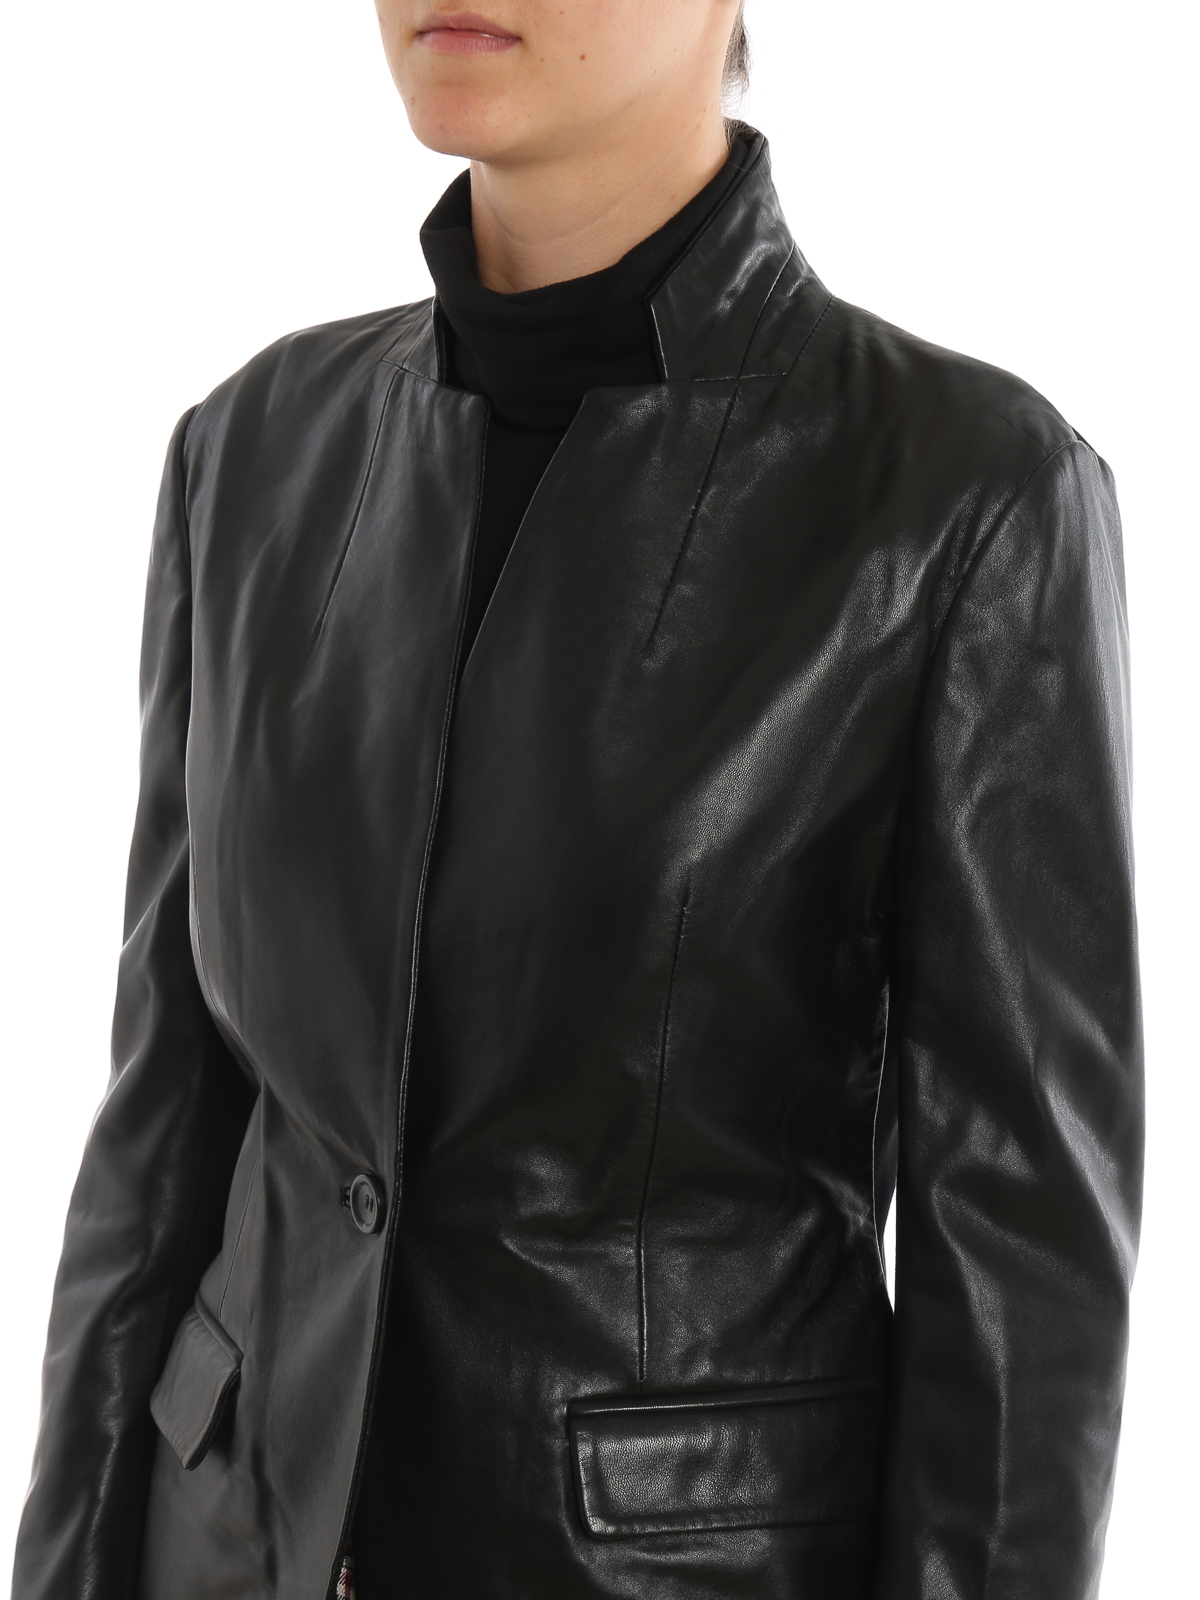 Leather jacket P.A.R.O.S.H. - jacket leather - MAZED430758013 Maze